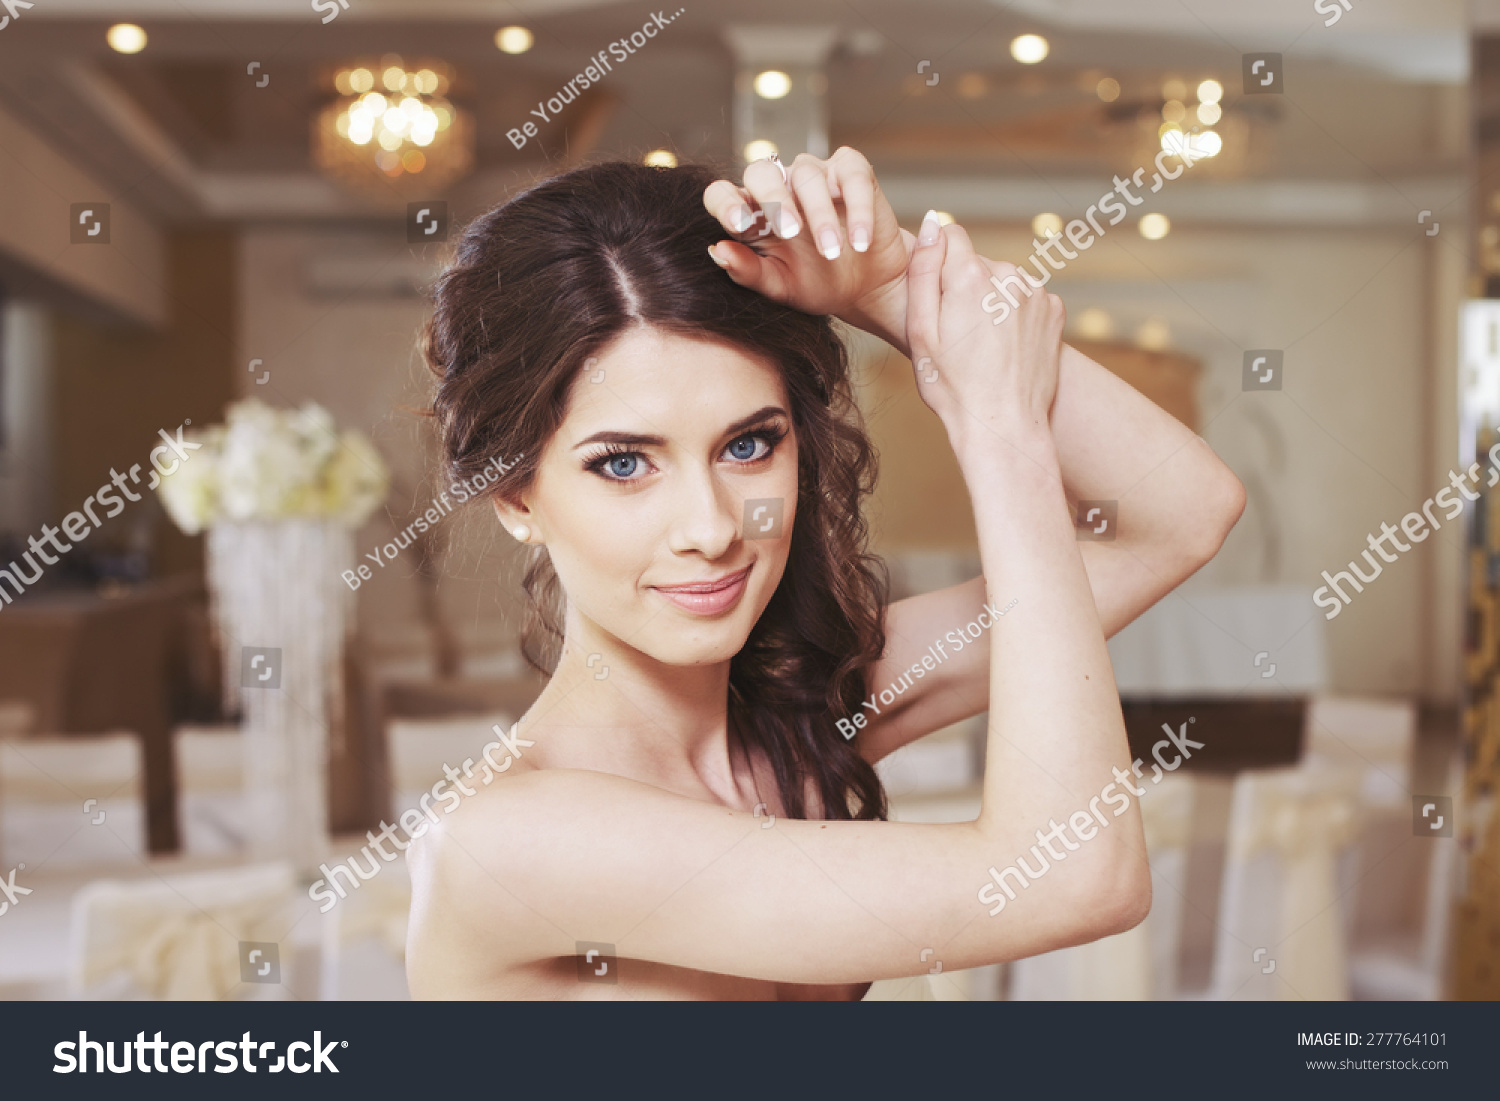 Wedding emotional portrait of happy brunette bride.  #277764101